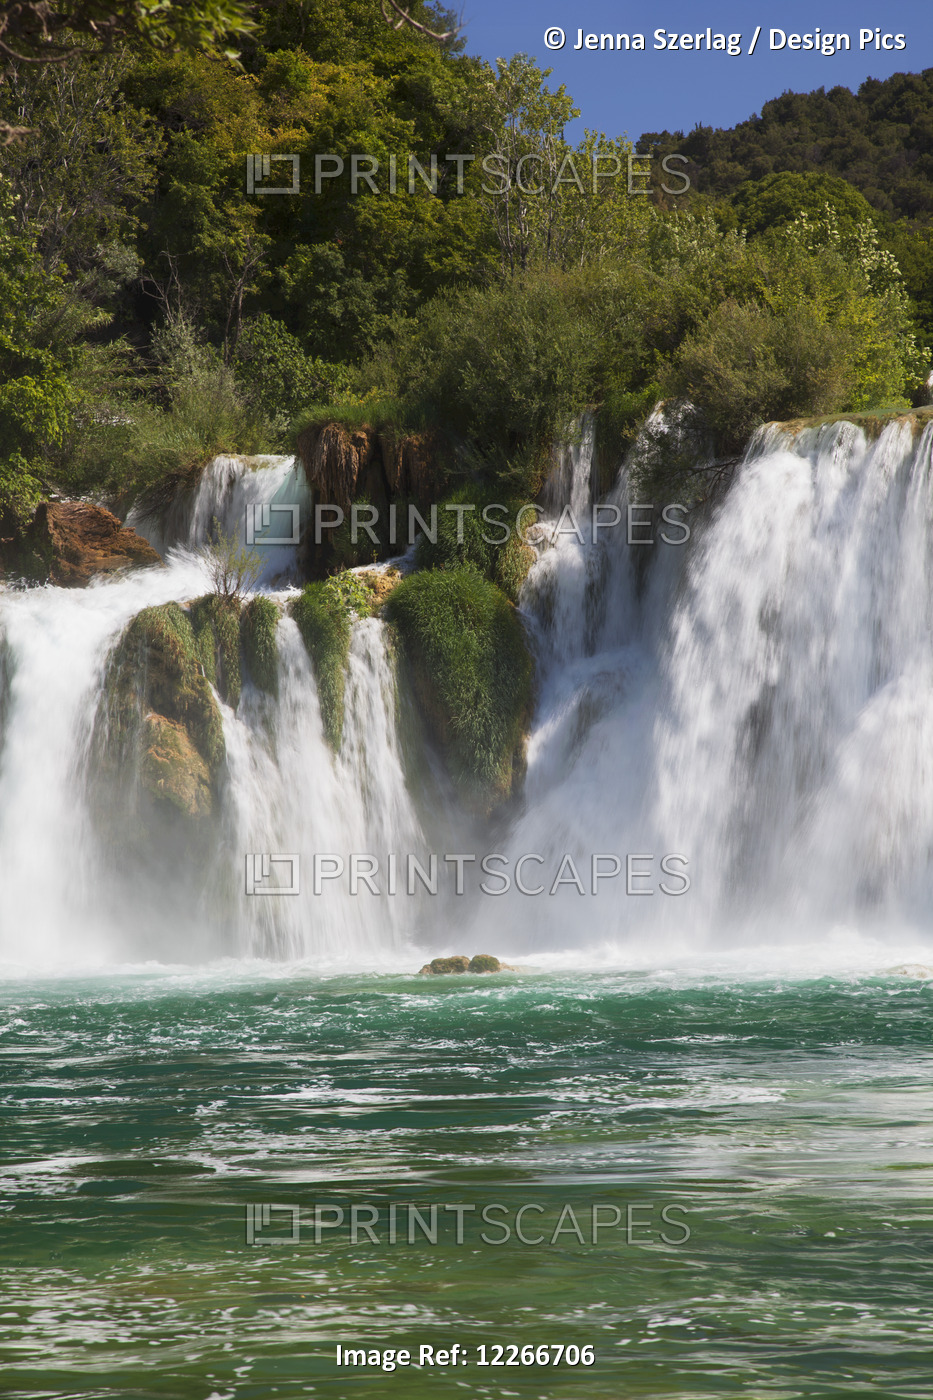 Waterfalls In Krka National Park; Sibenik, Dalmatia, Croatia